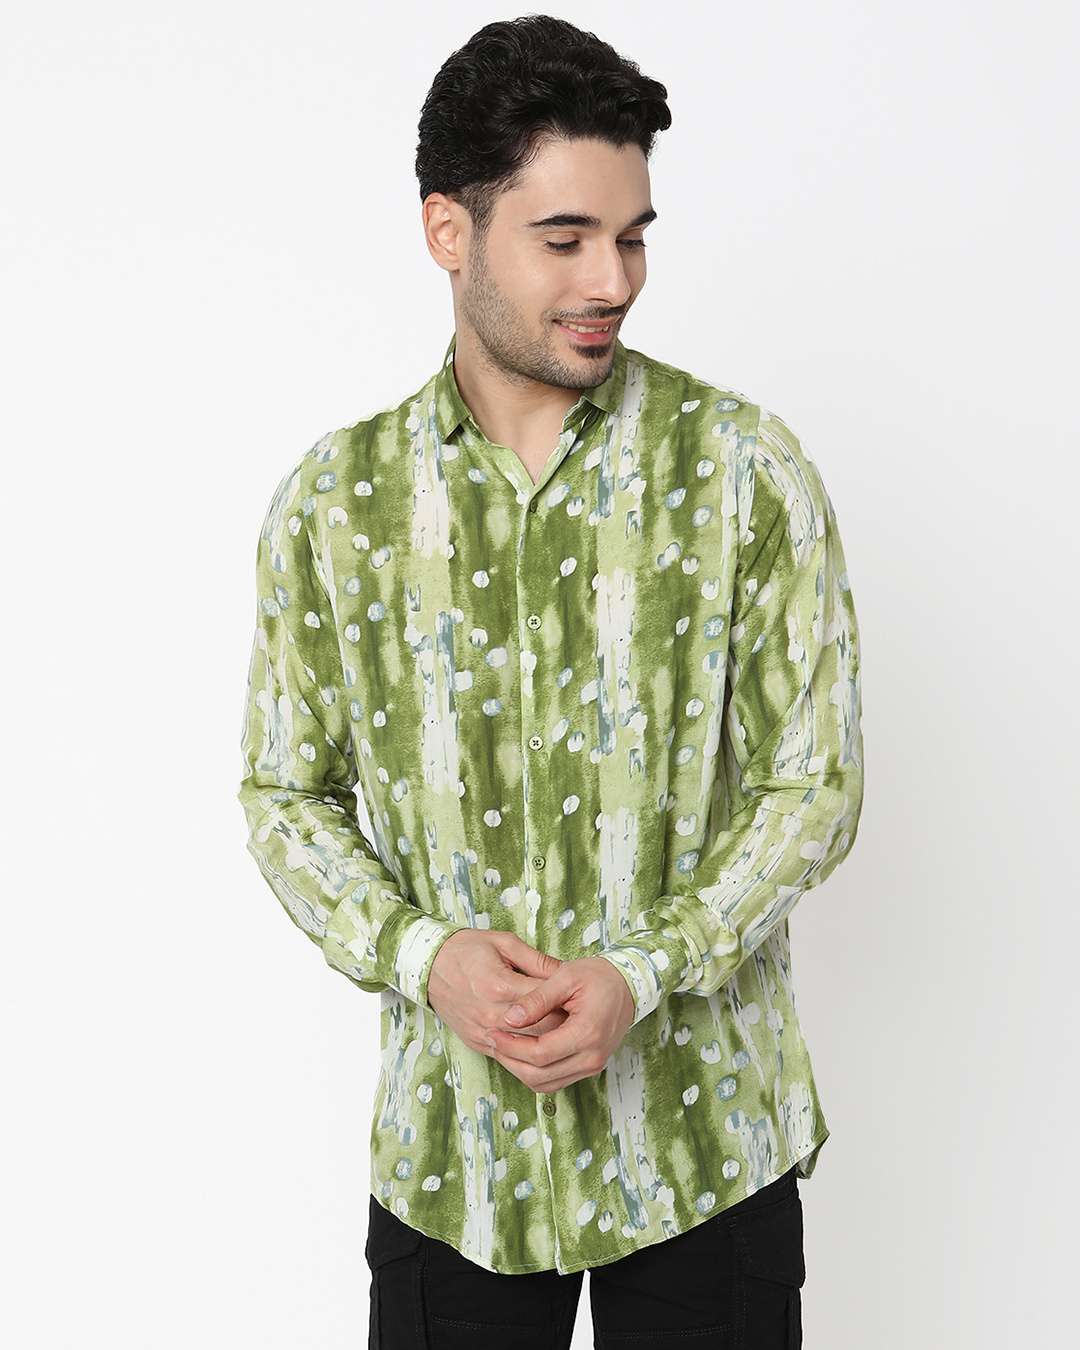 Buy Men's Green Abstract Printed Shirt Online at Bewakoof